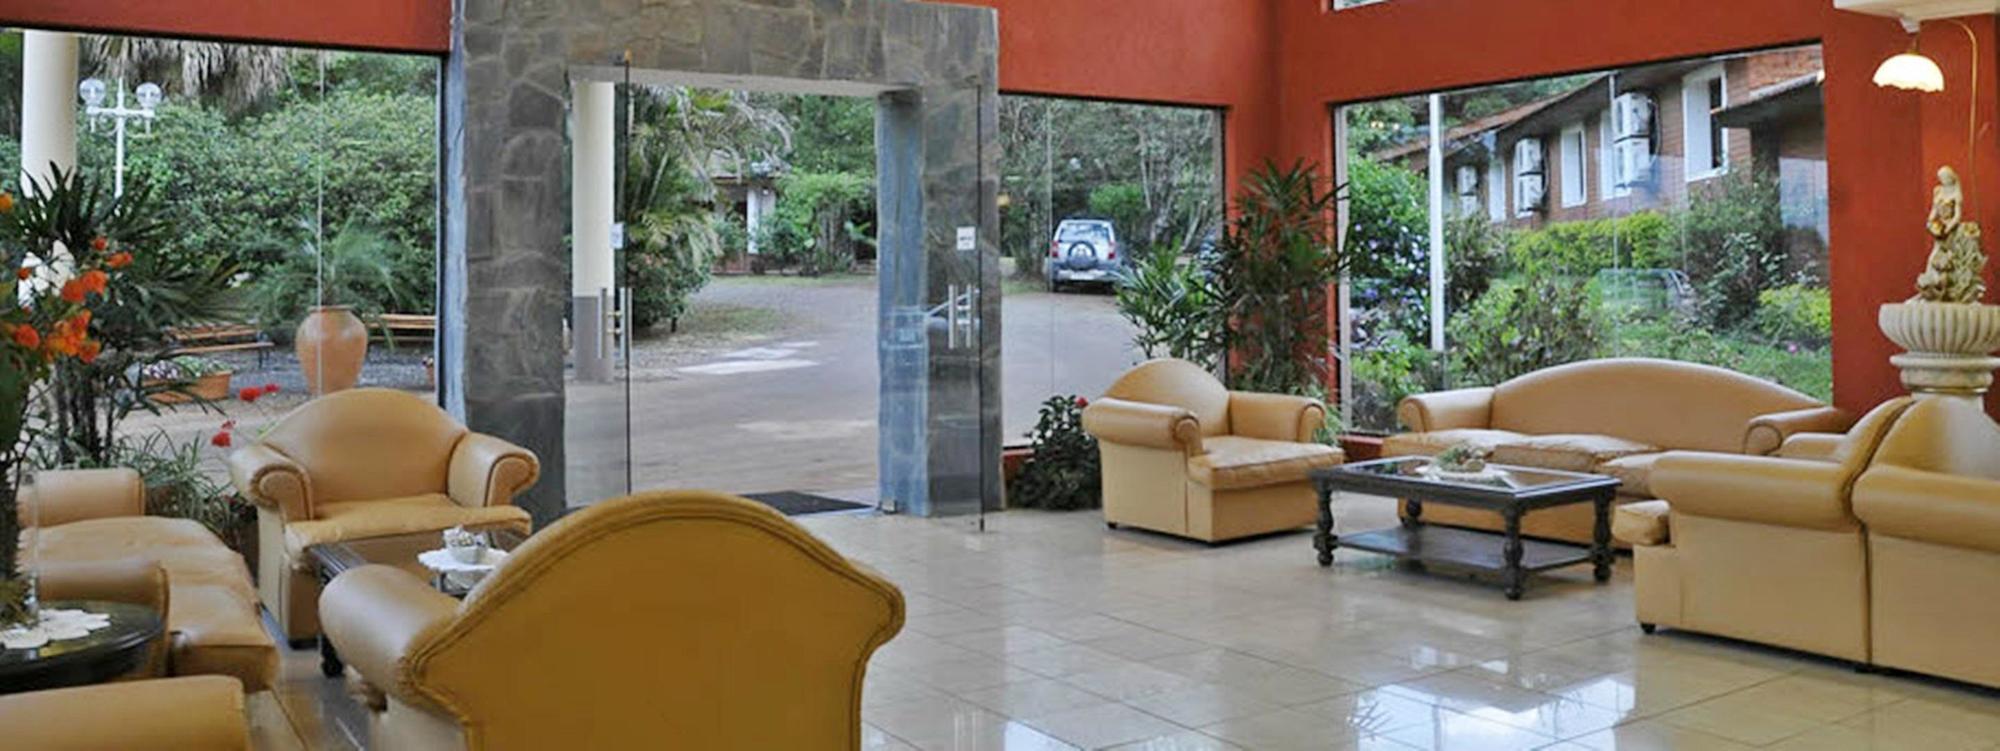 Orquideas Hotel & Cabanas ปูแอร์โตอีกวาซู ภายนอก รูปภาพ